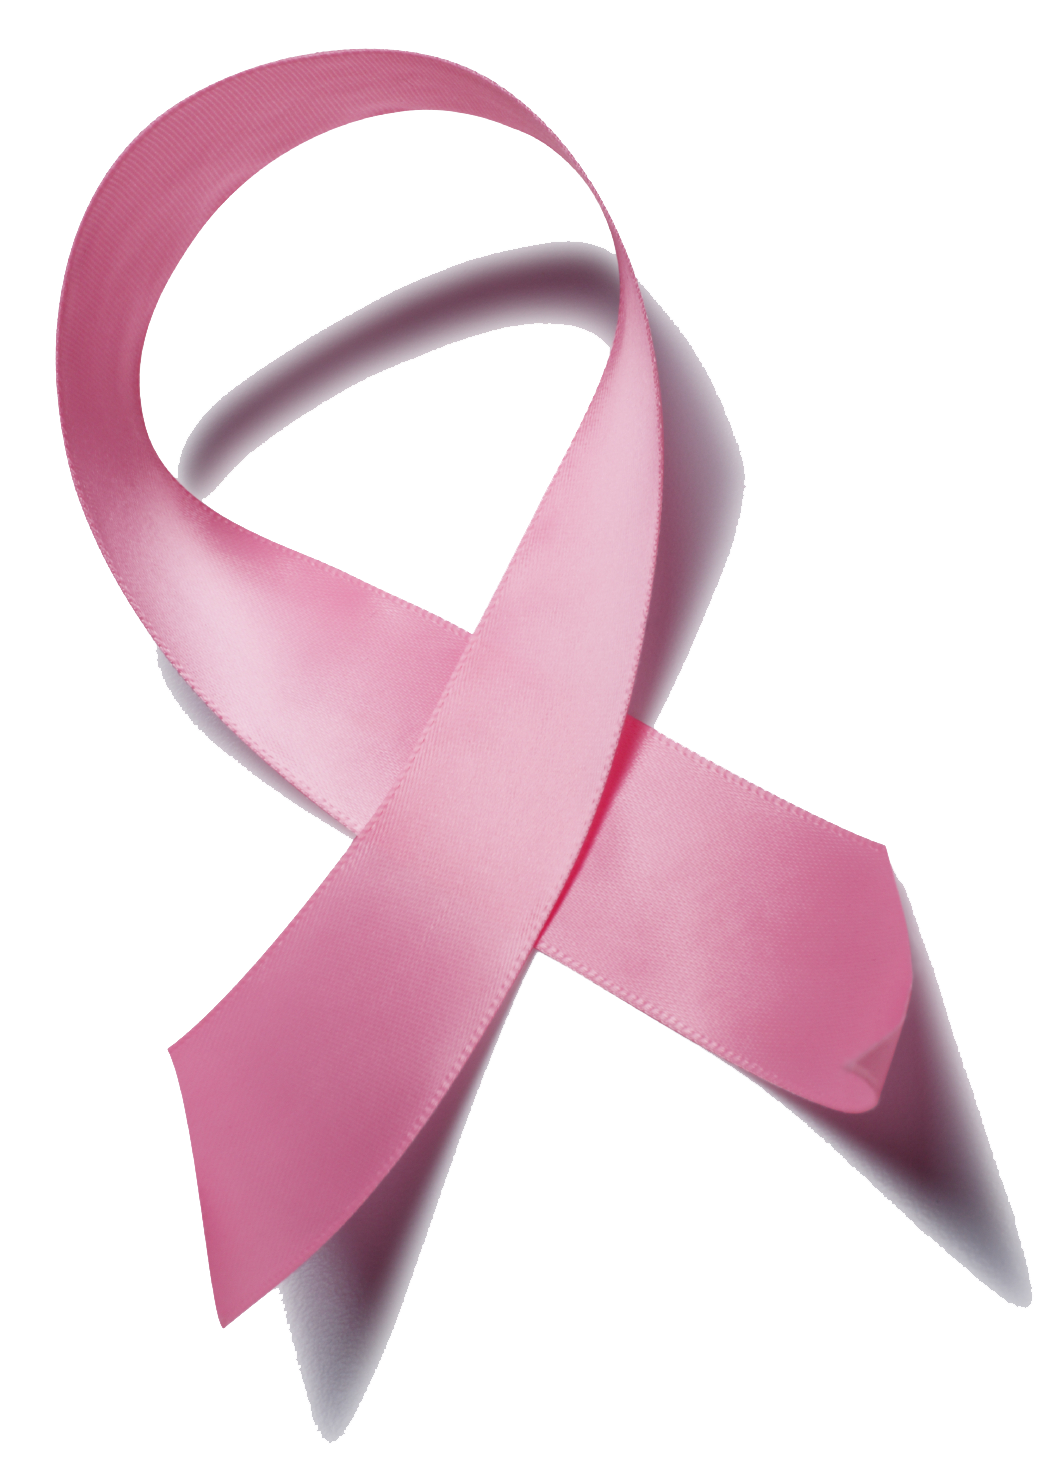 Cancer Pink Ribbon PNG Image Background